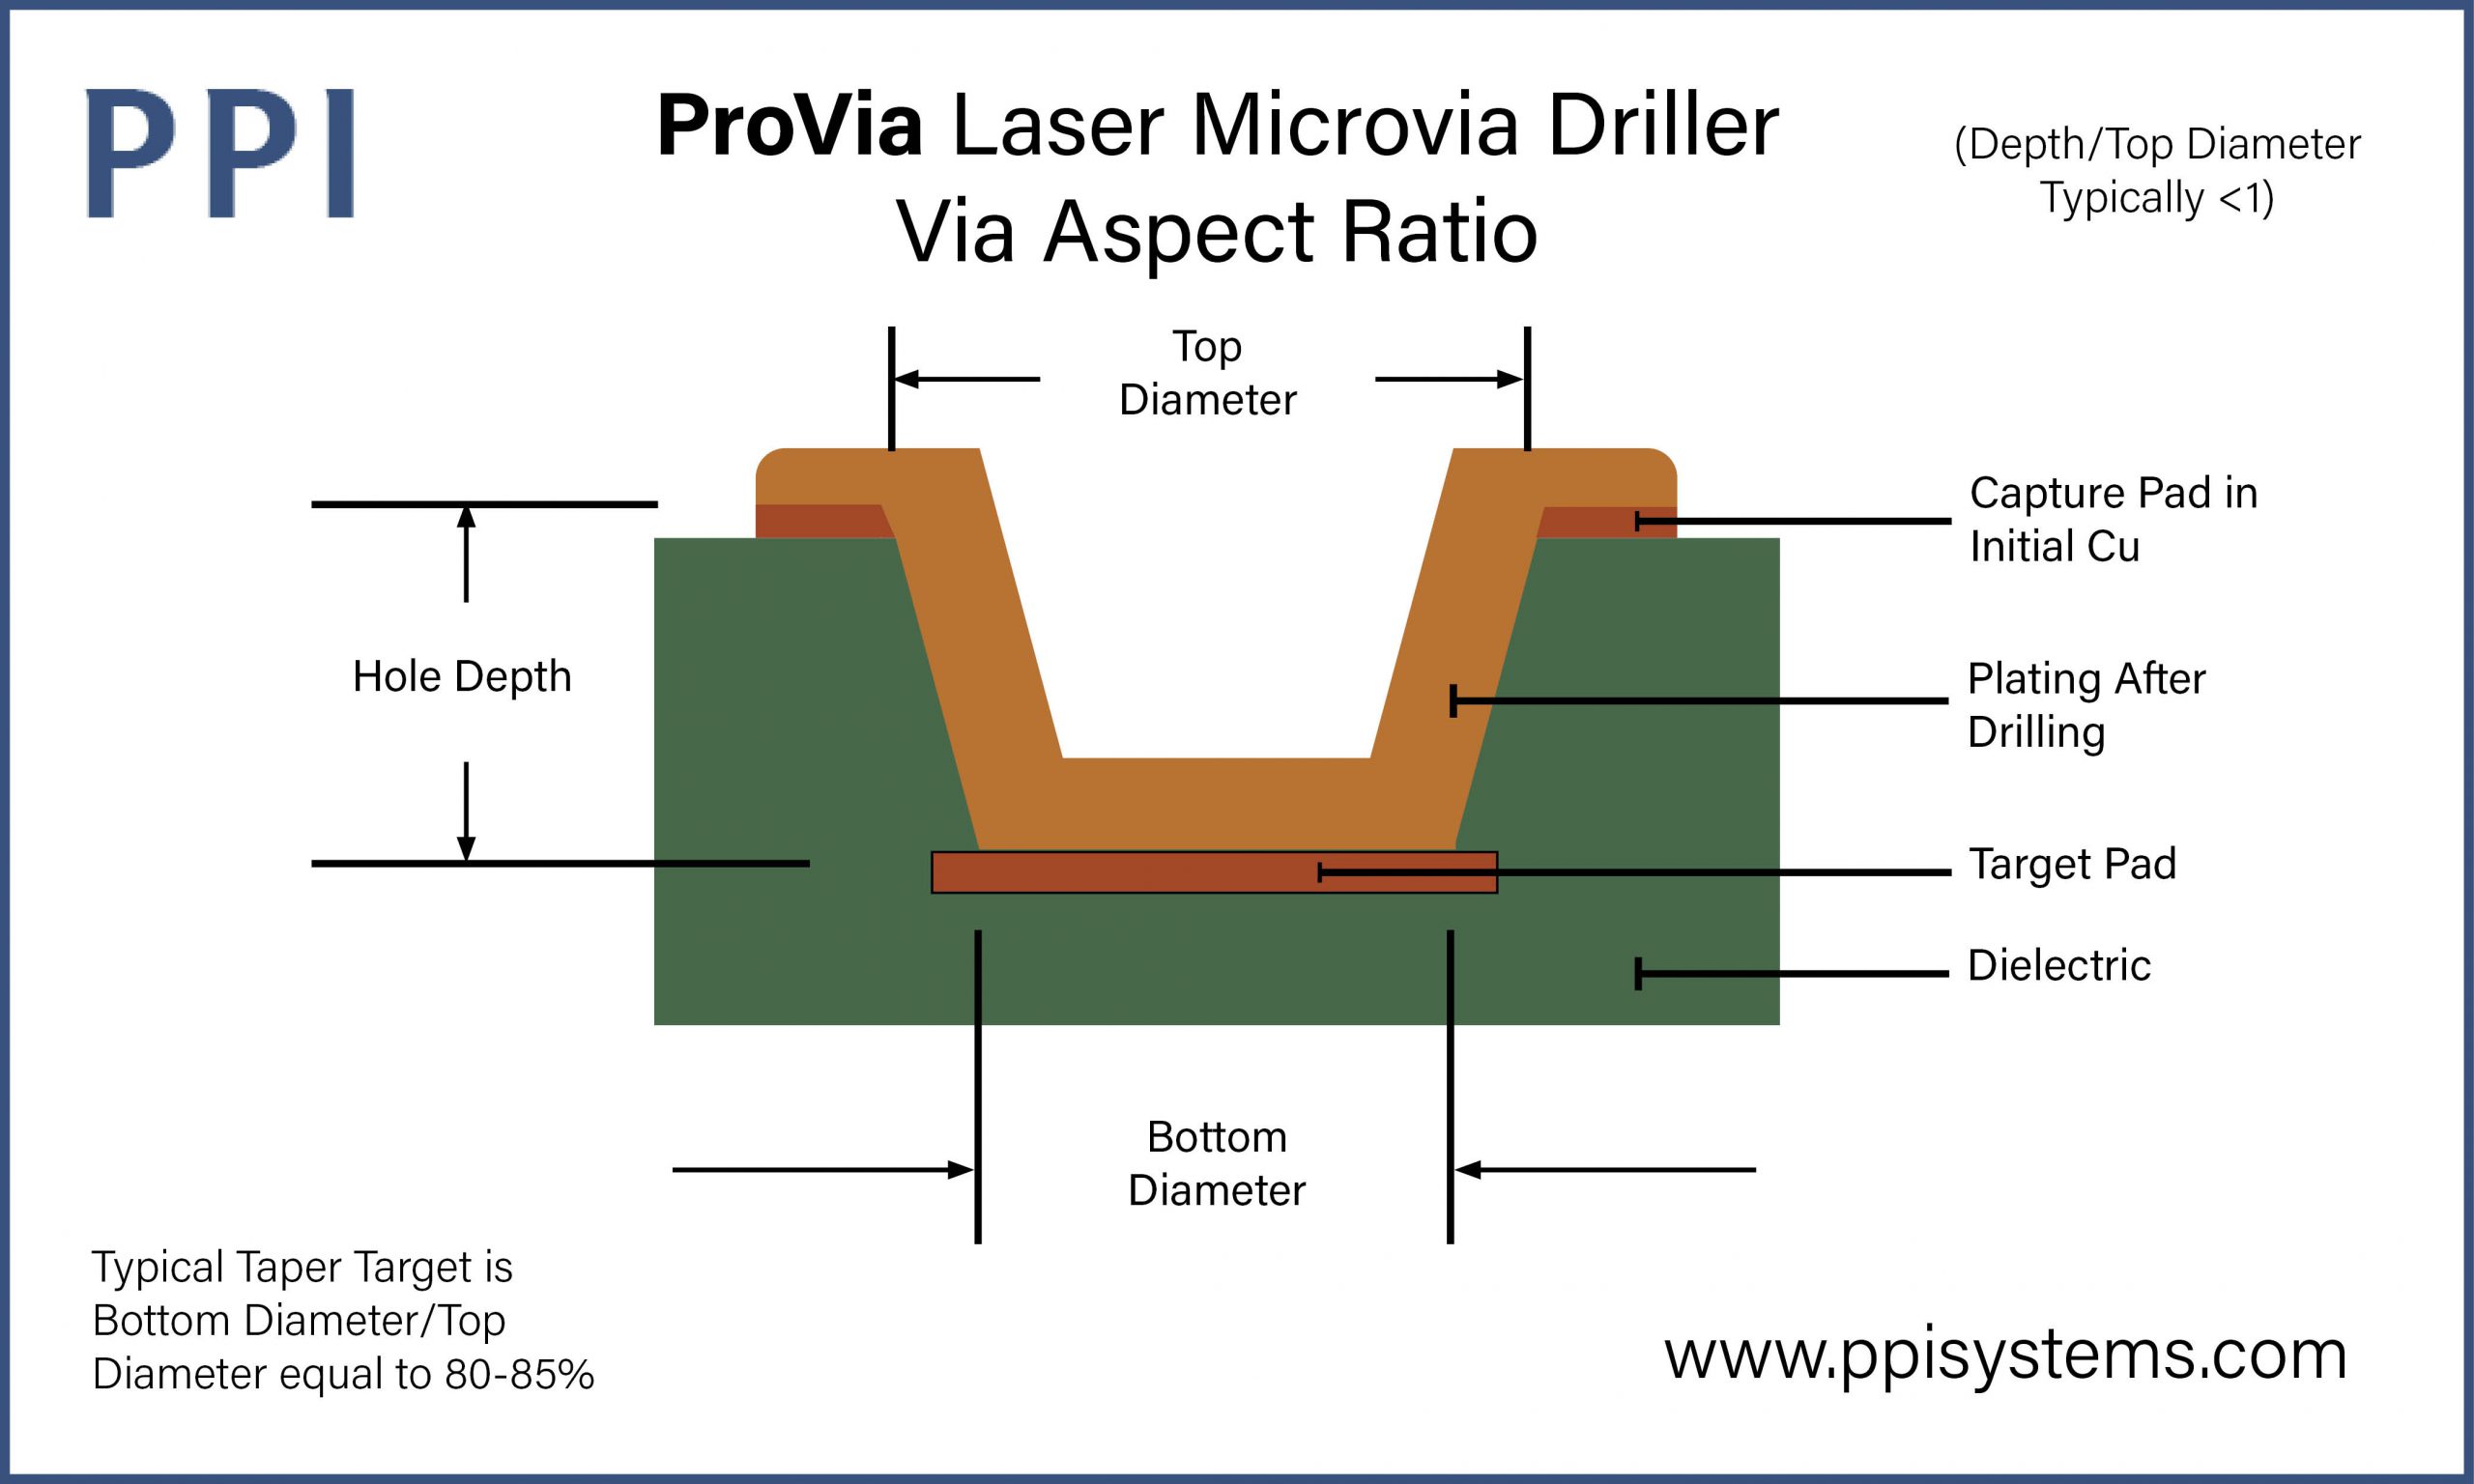 provia laser microvia driller via aspect ratio